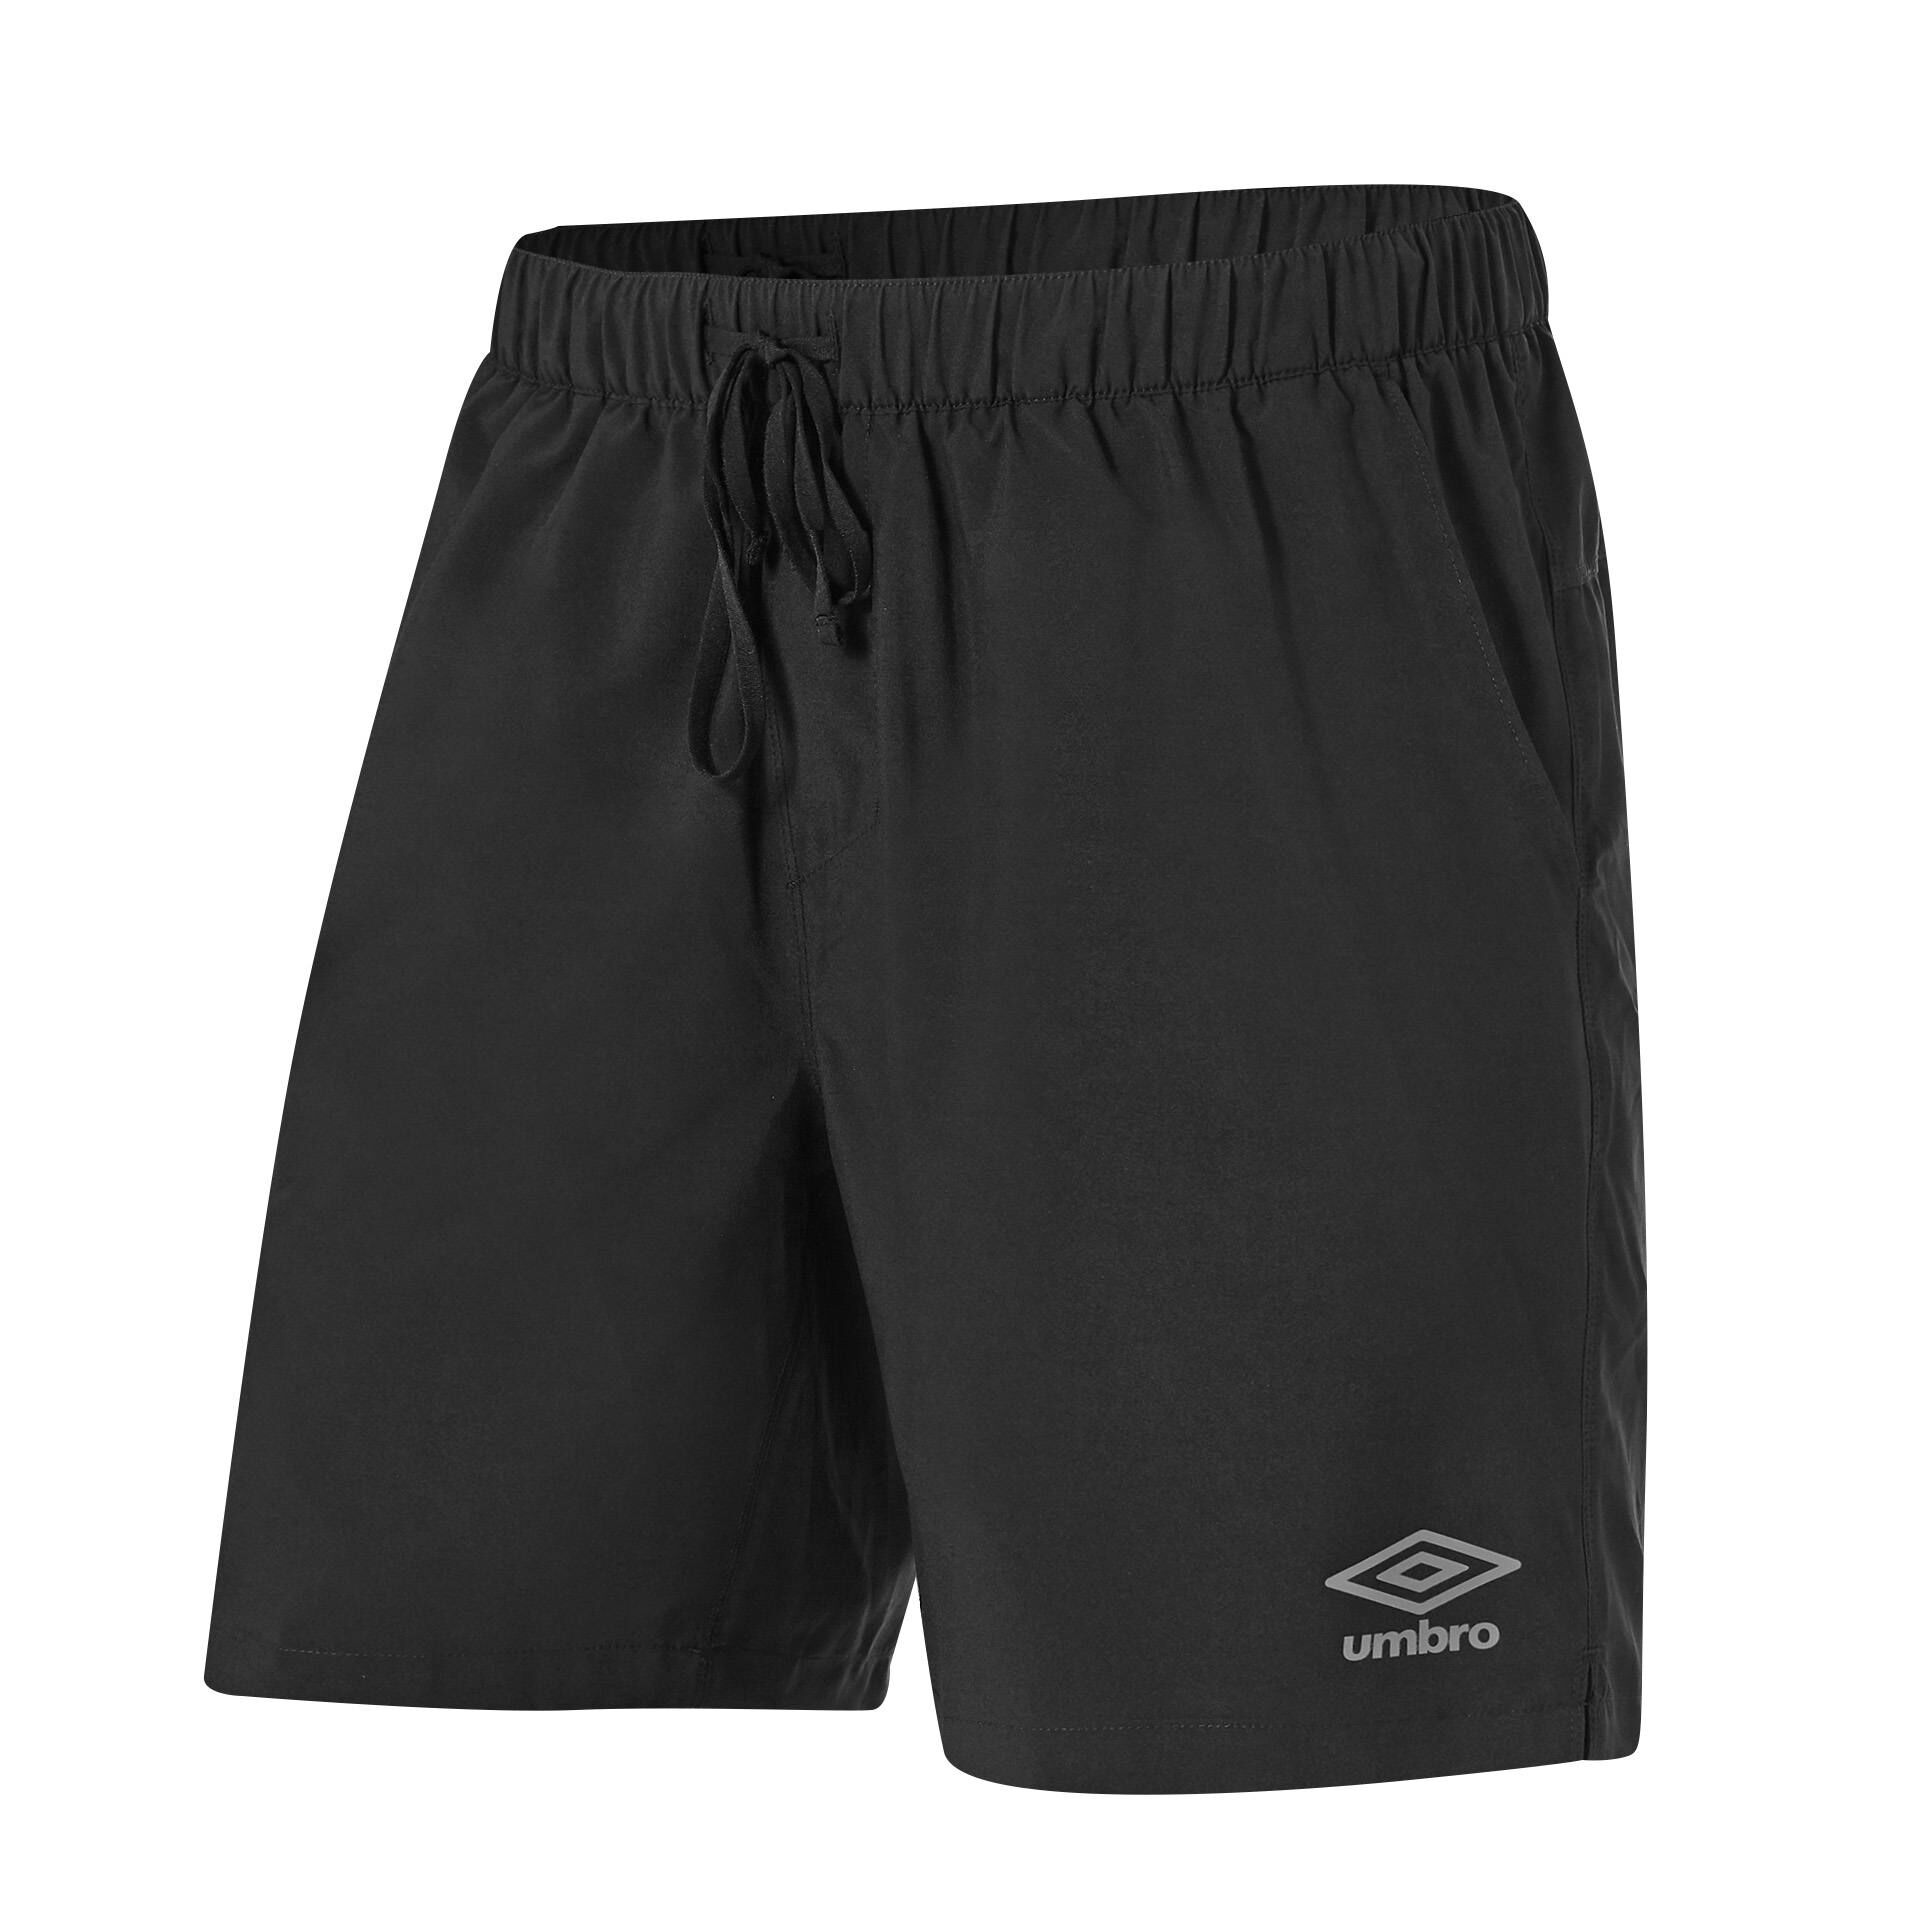 umbro men's shorts